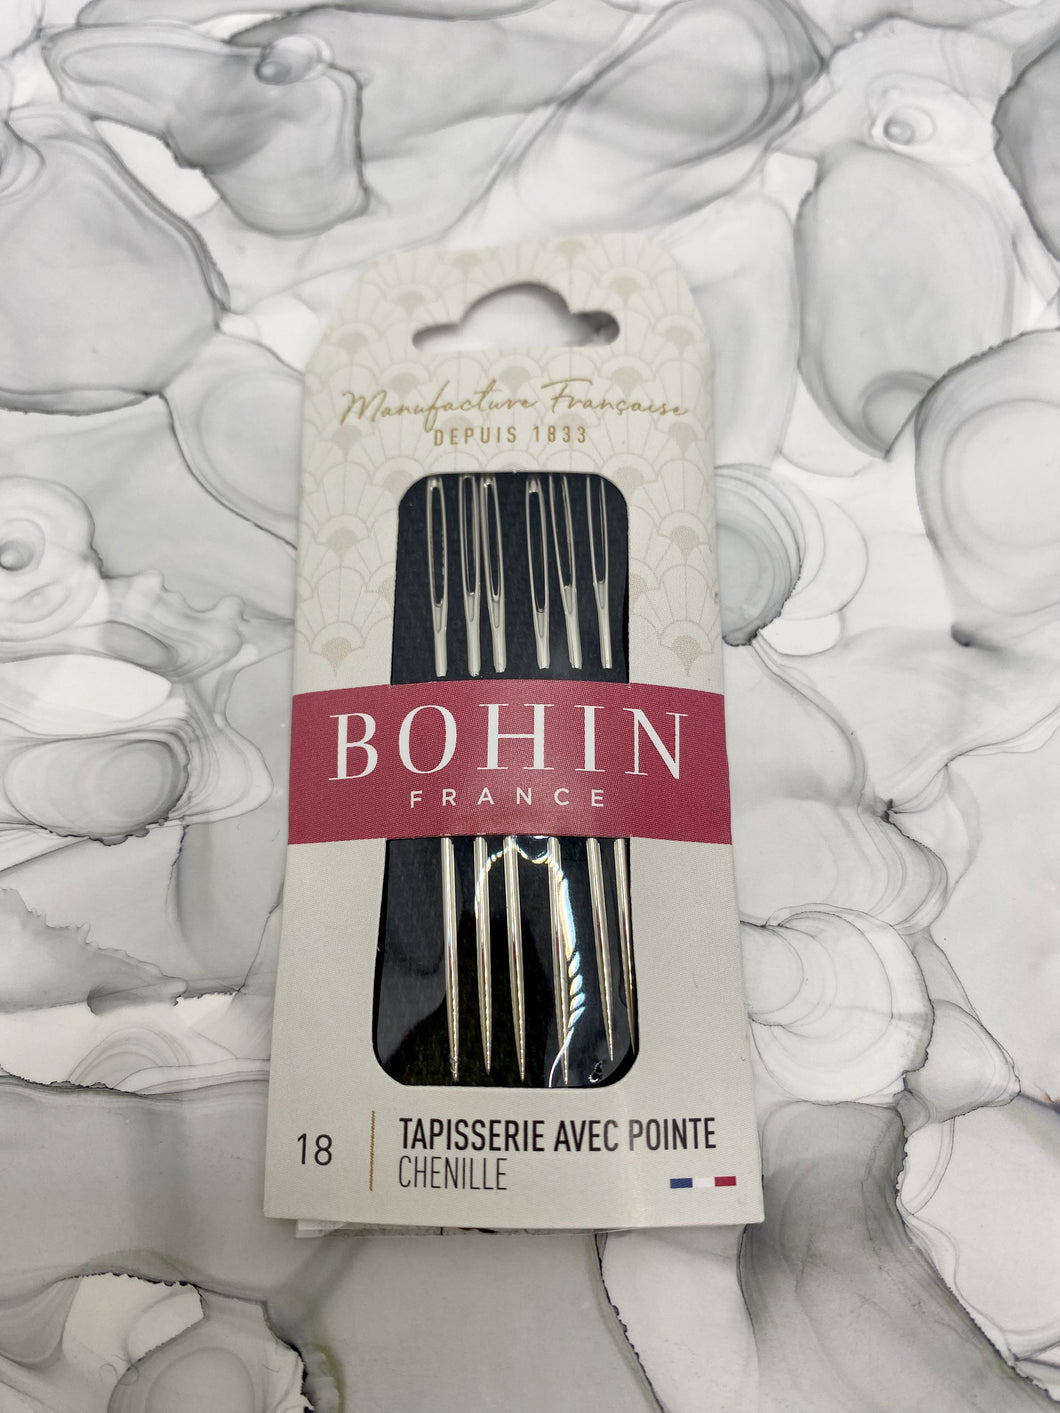 Bohin Chenille Needles, Size 18